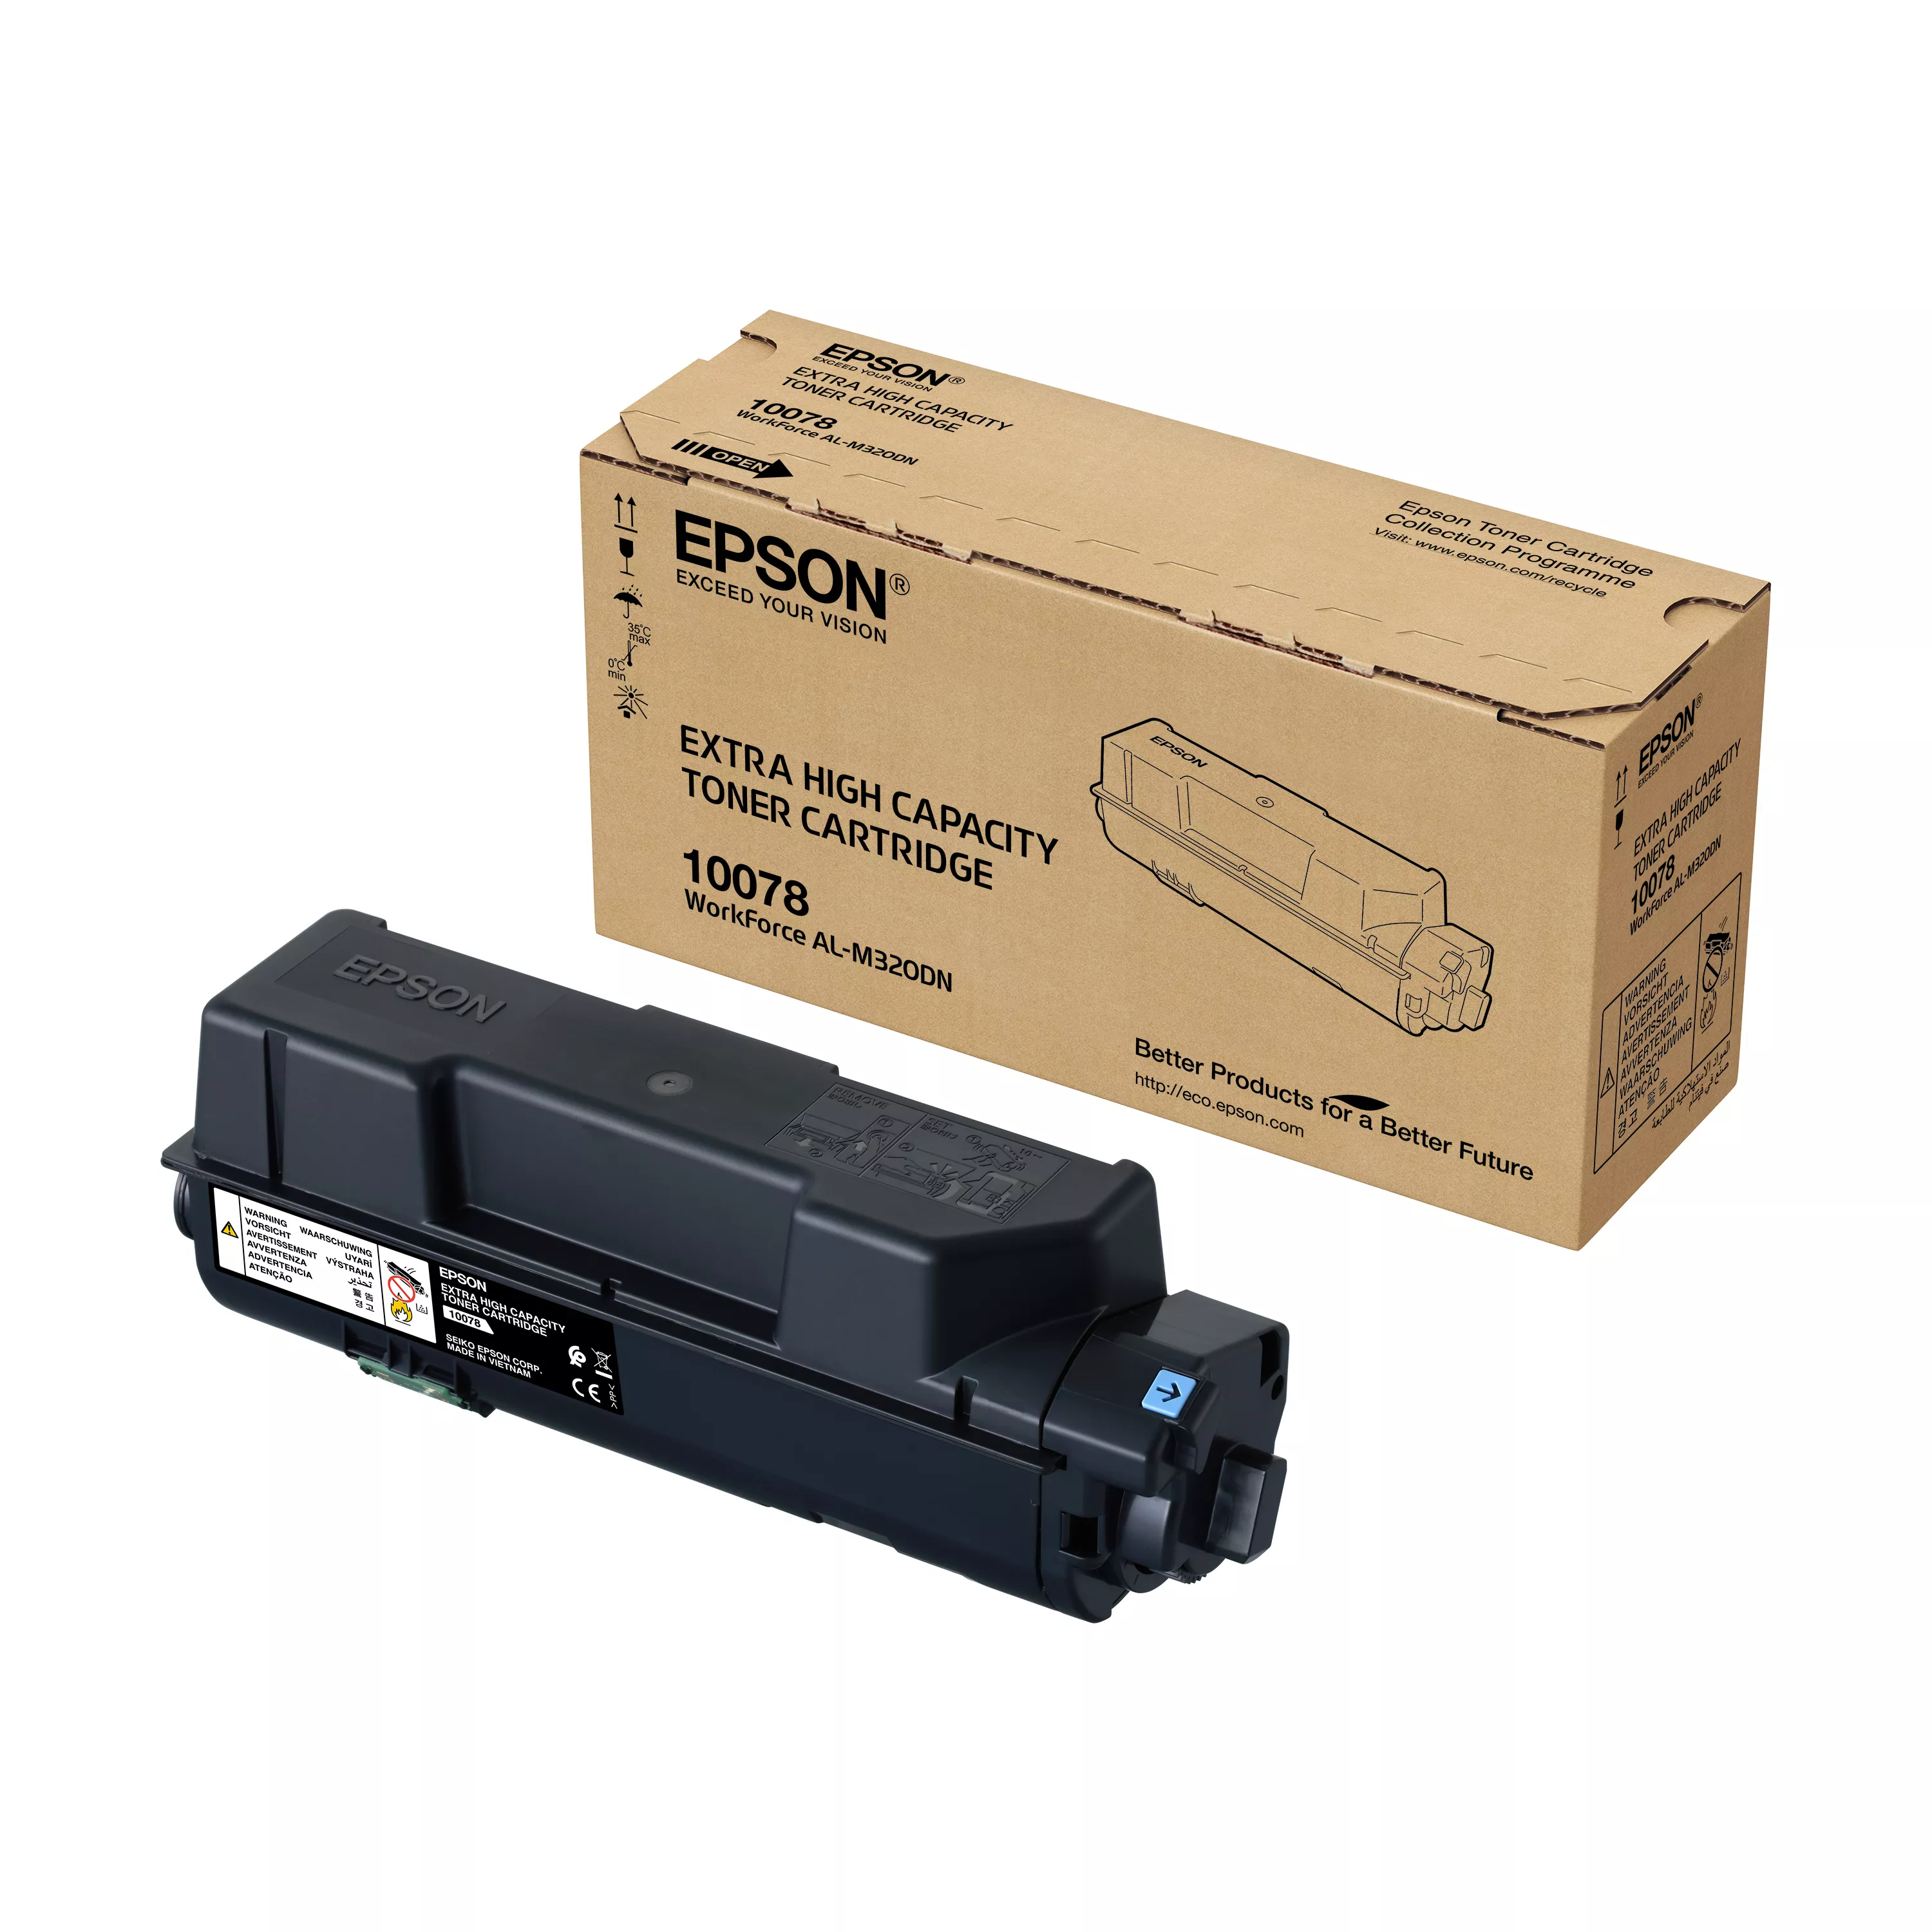 Revendeur officiel EPSON High Capacity Toner Cartridge Black